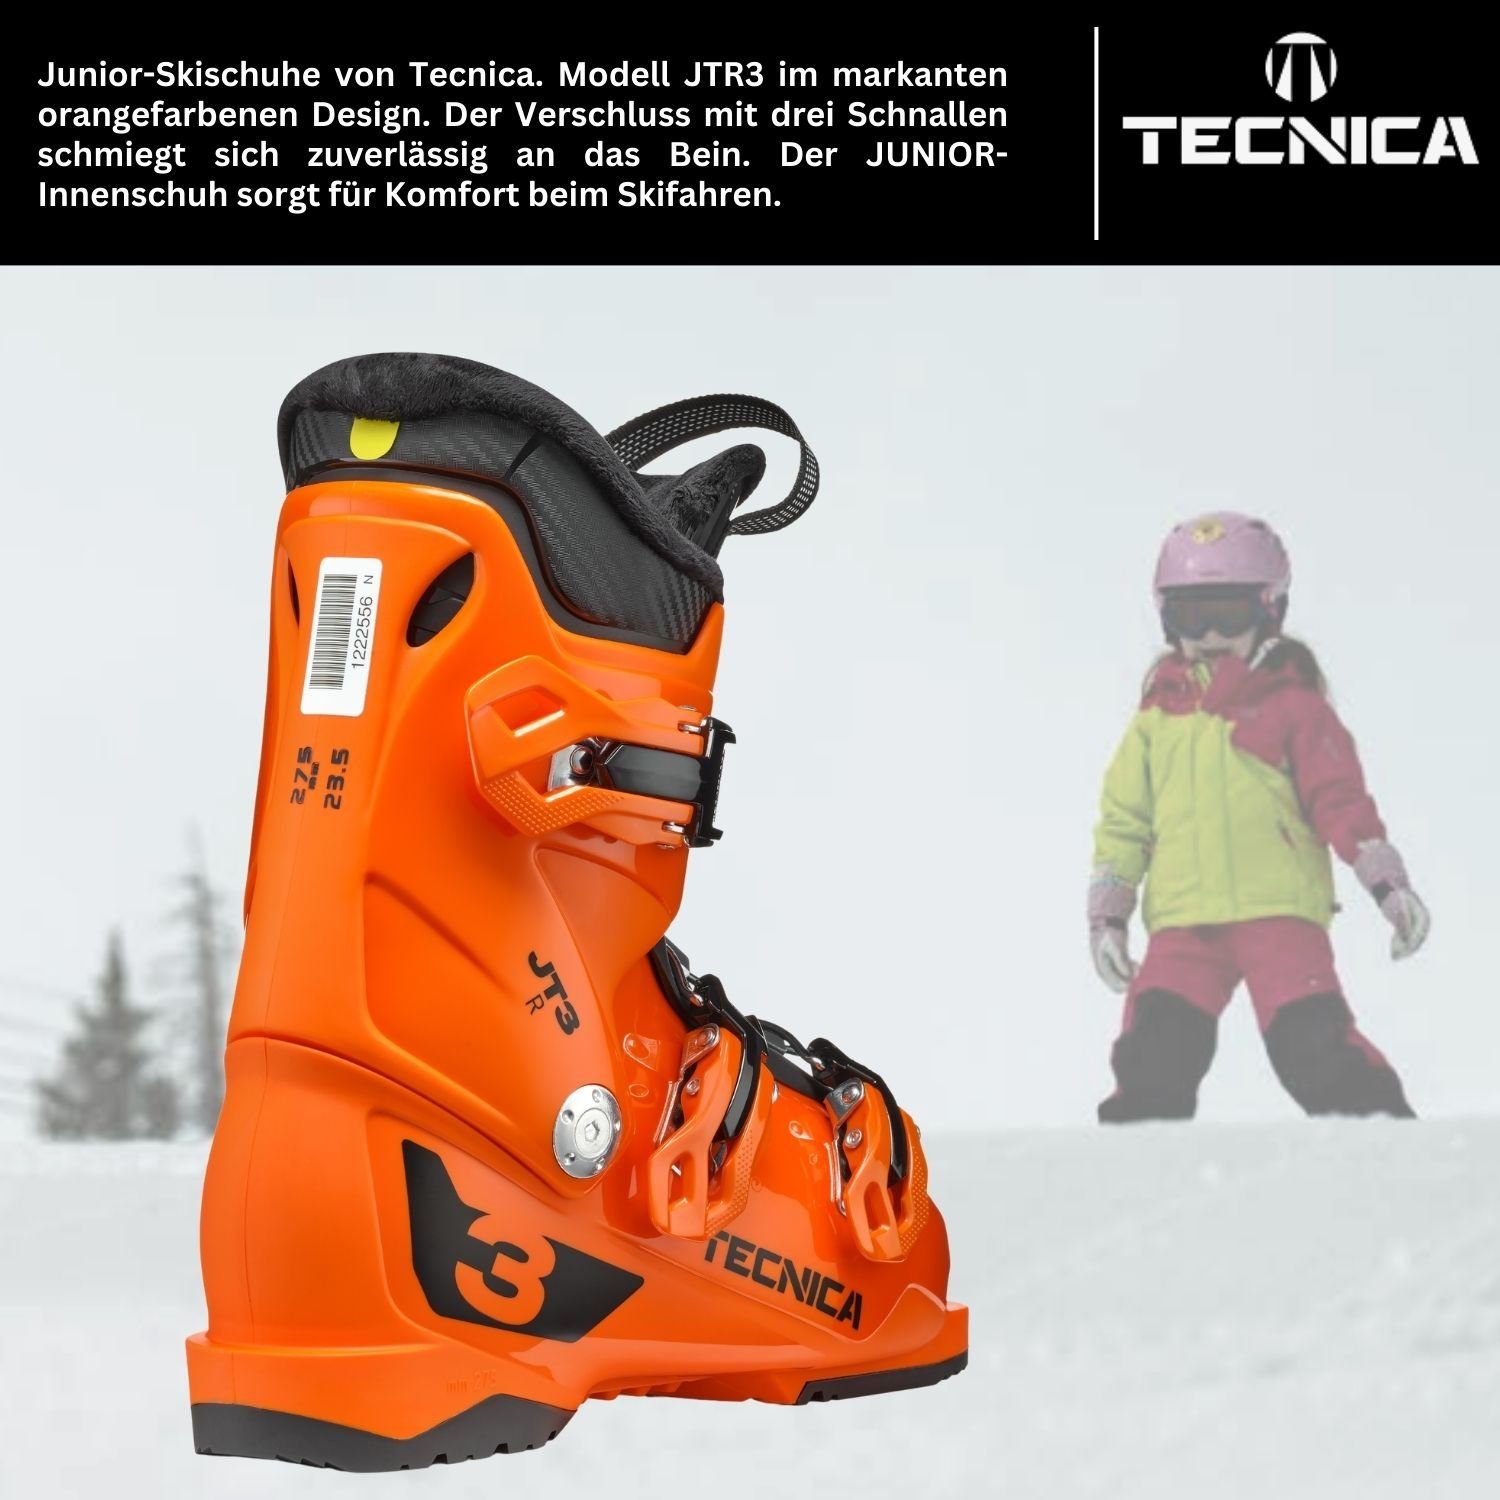 Flex TECNICA Ski 3 Alpin Skischuhe 60 Tecnica Kinder Skischuh Junior JTR